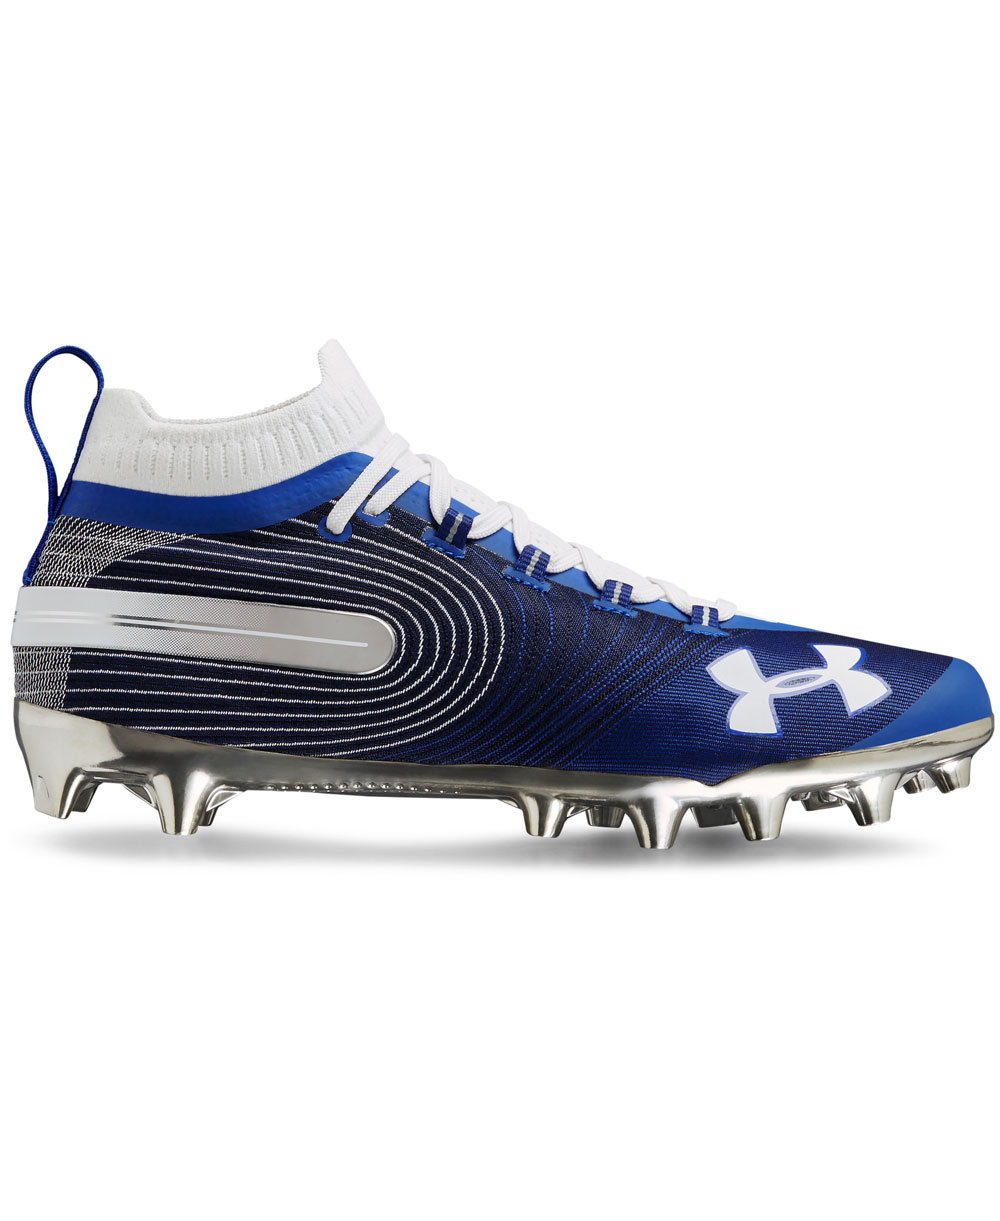 Zapatos Futbol Americano Under Armour Xxl - 1686202867